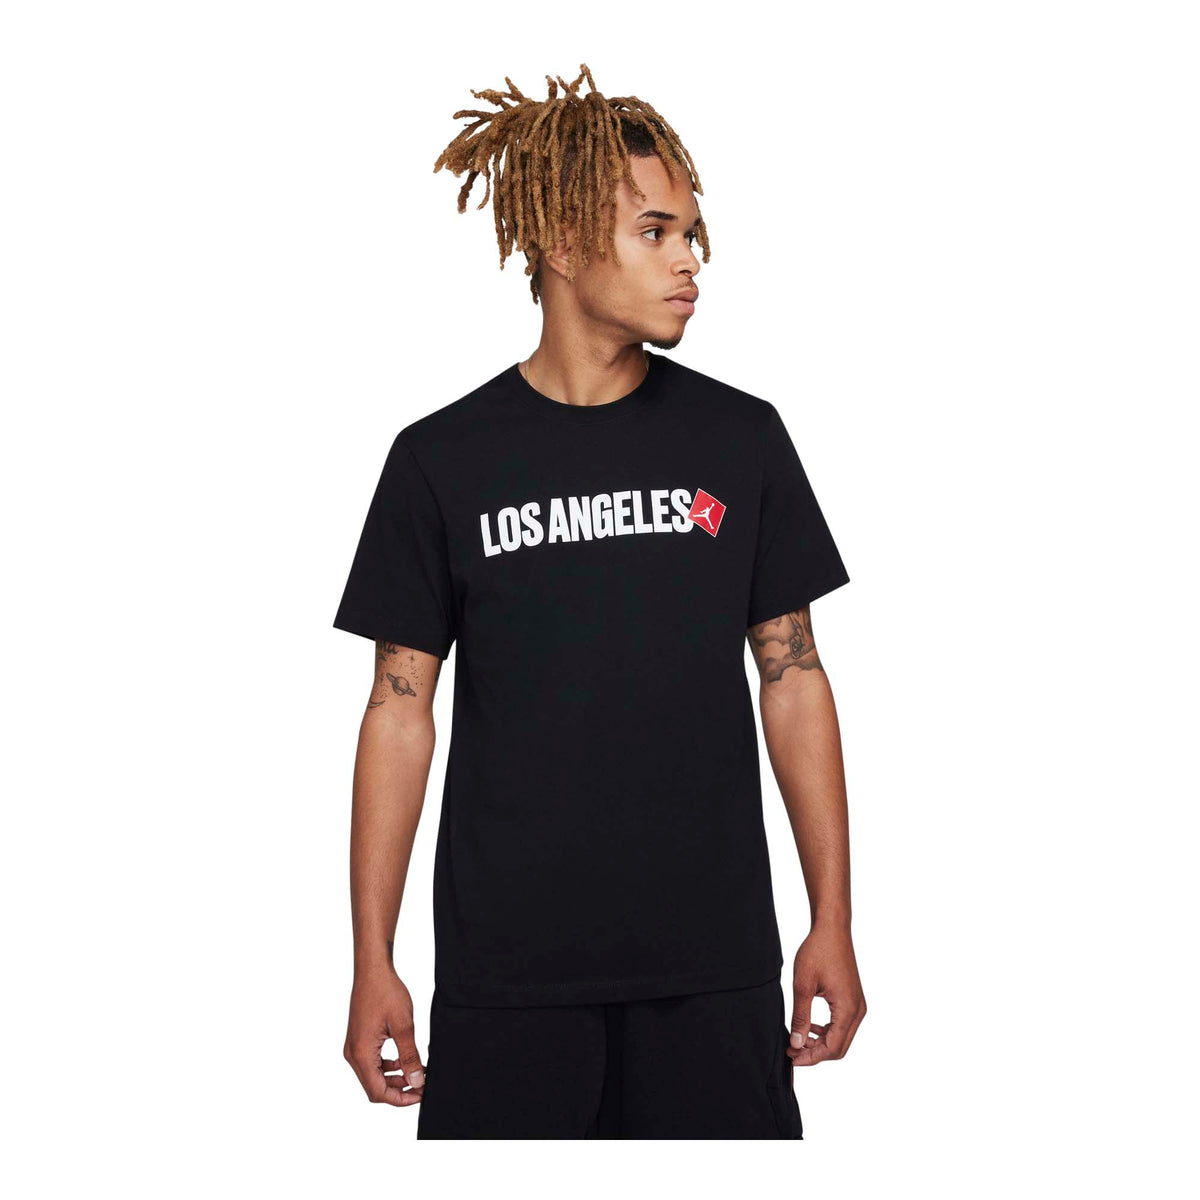 Jordan Los Angeles Men's Short-Sleeve T-Shirt.